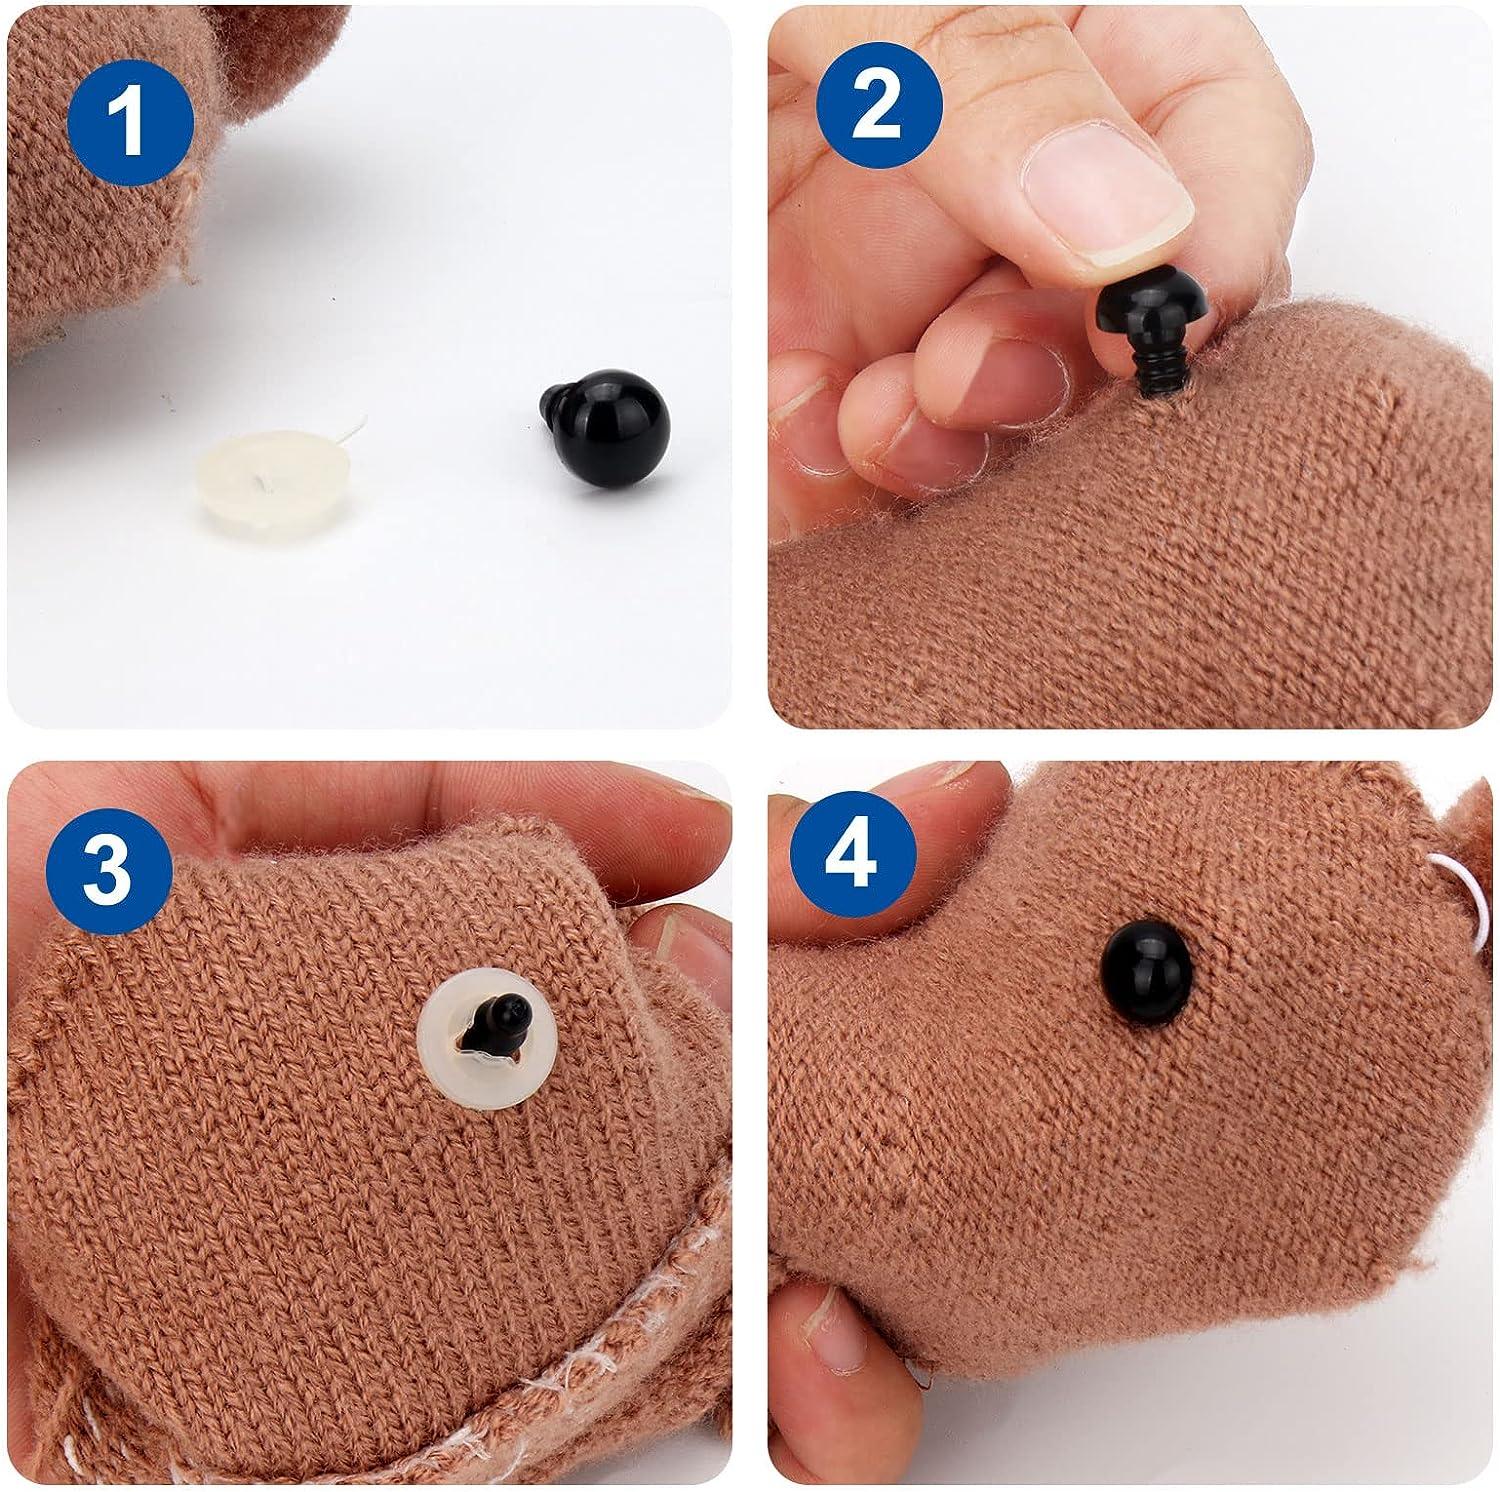 Large Safety Eyes for Amigurumi Crochet 18-30mm - RuWfpz 4 Sizes Stuffed Animal Eyes with Washers, 80pcs Black Plastic Crochet Safety Eyes for Crafts